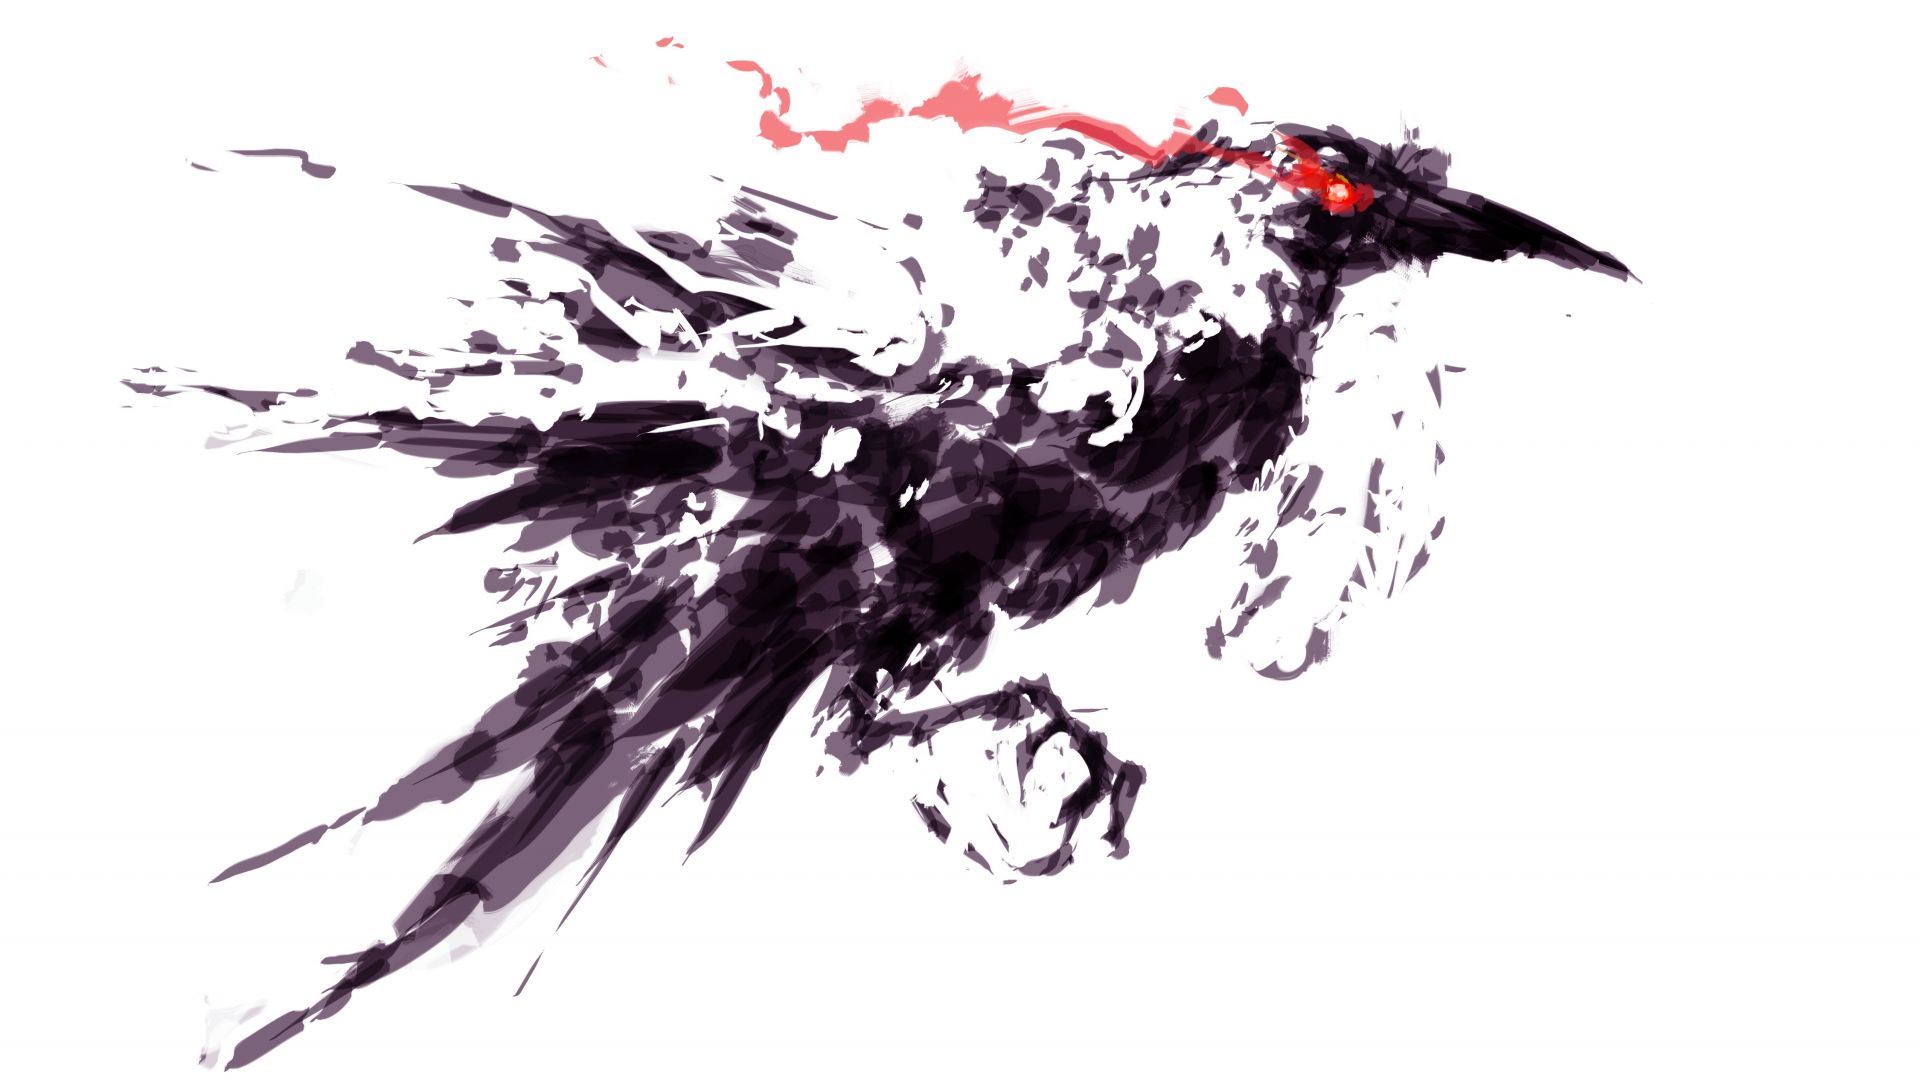 640x640 2409 The Eye Catcher 2d fantasy bird raven  Raven pictures Black  bird Animal spirit guide